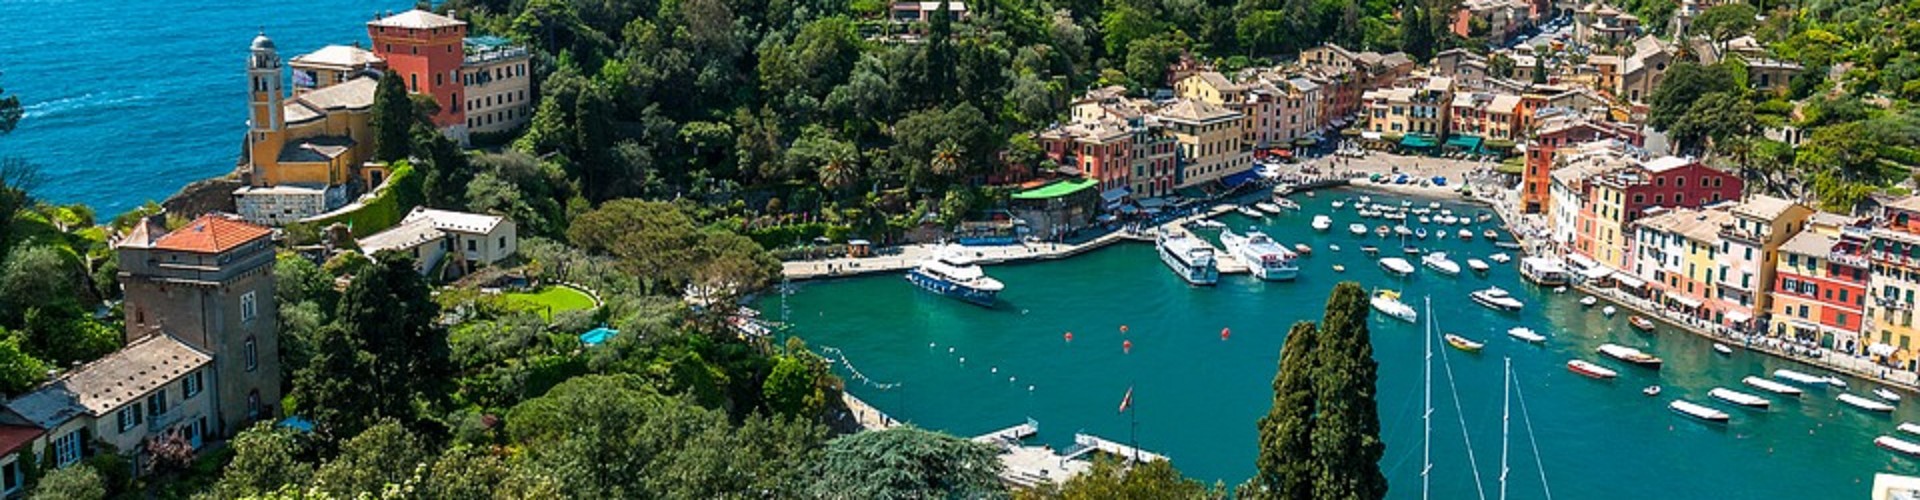 Tour Operator in Liguria | Wedding Planner Riviera Ligure | Personal Travel Coach in Liguria